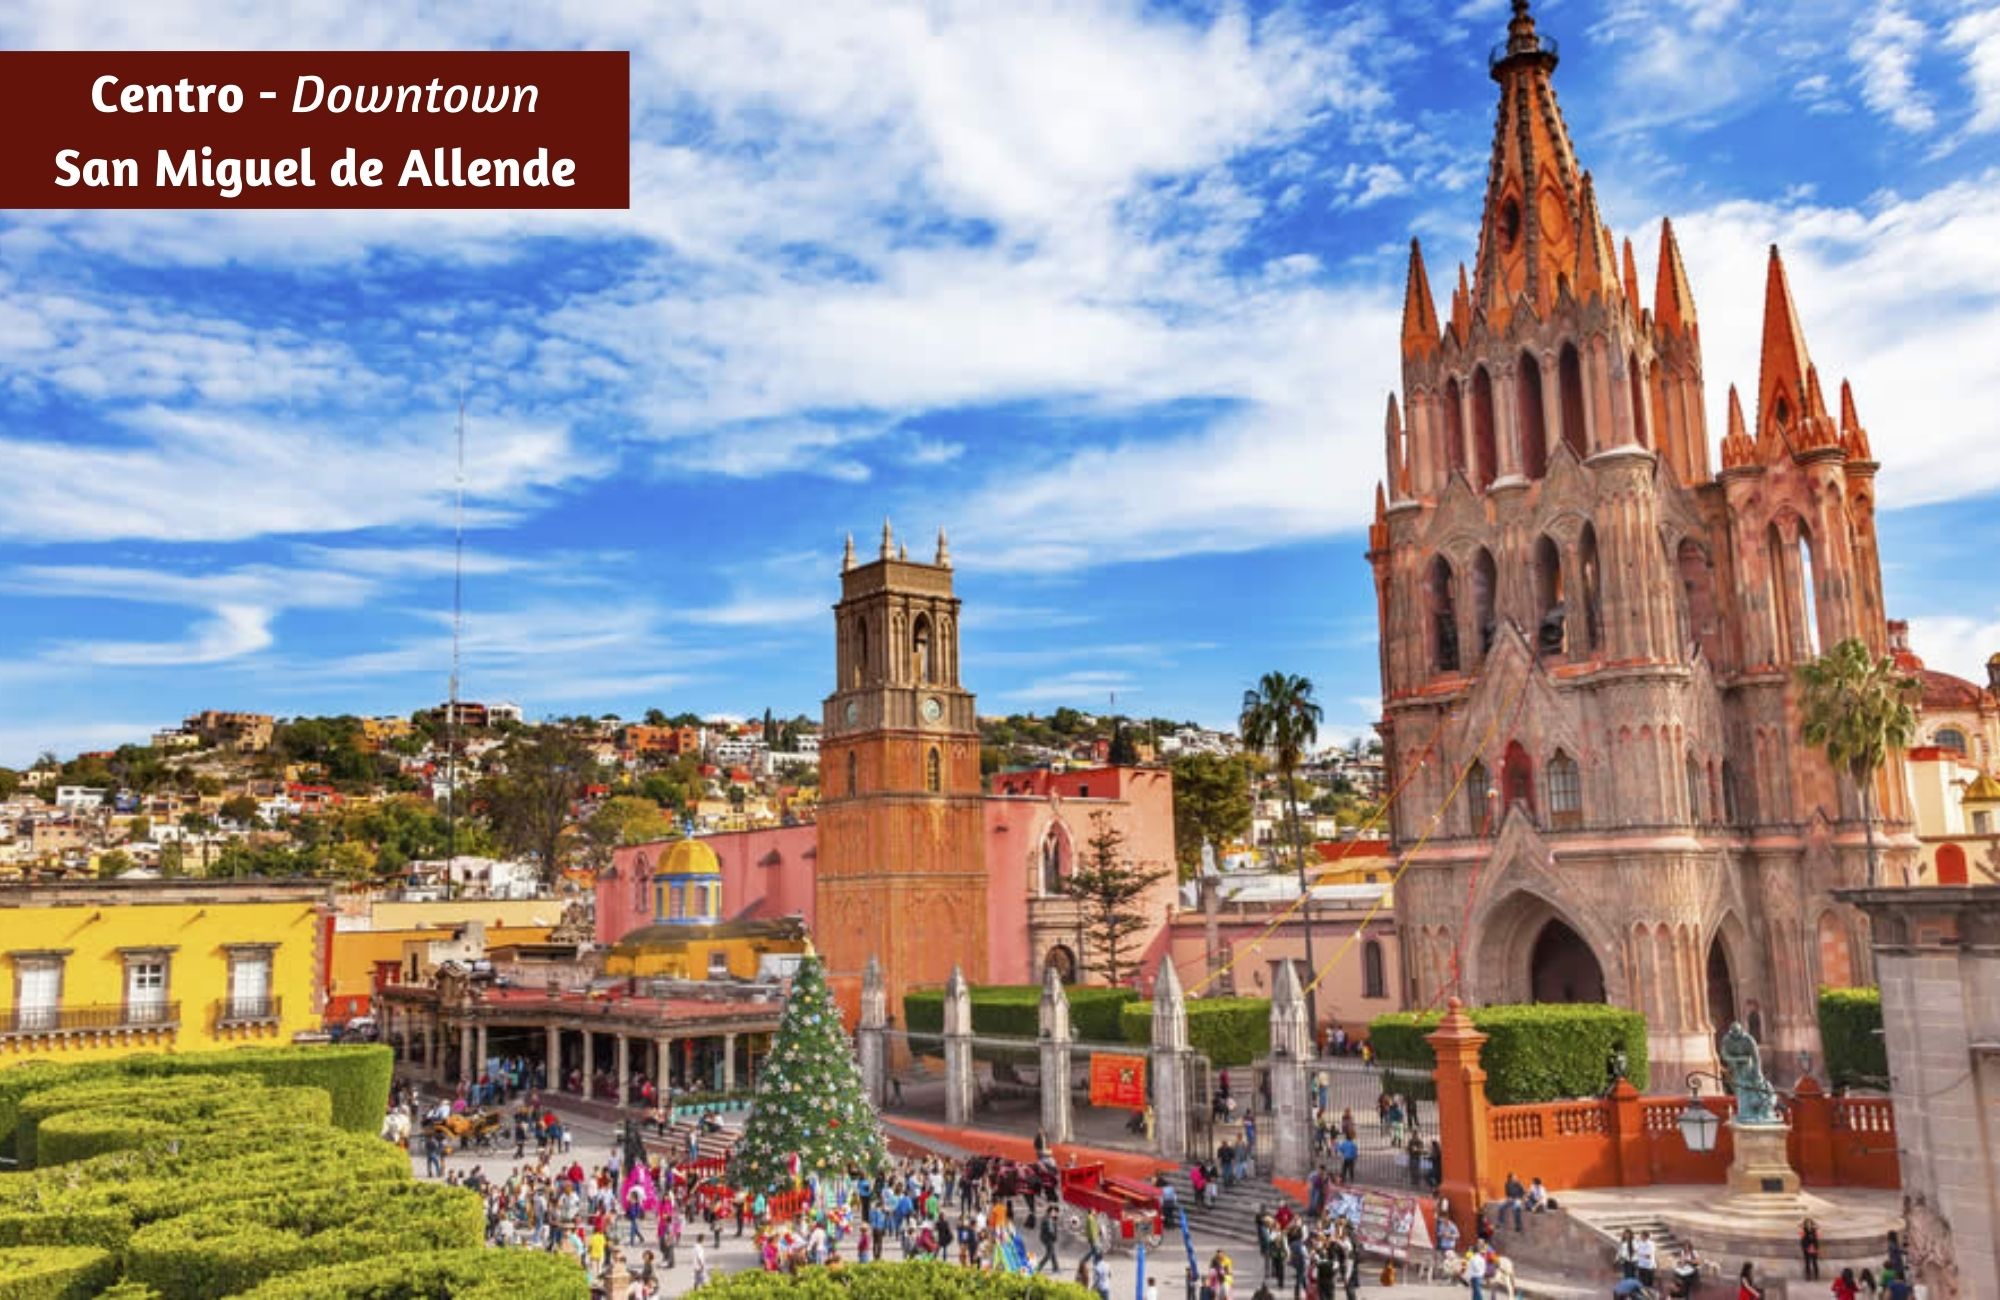 1,061 m2 lot in luxury community with amenities, for sale San Miguel de Allende.